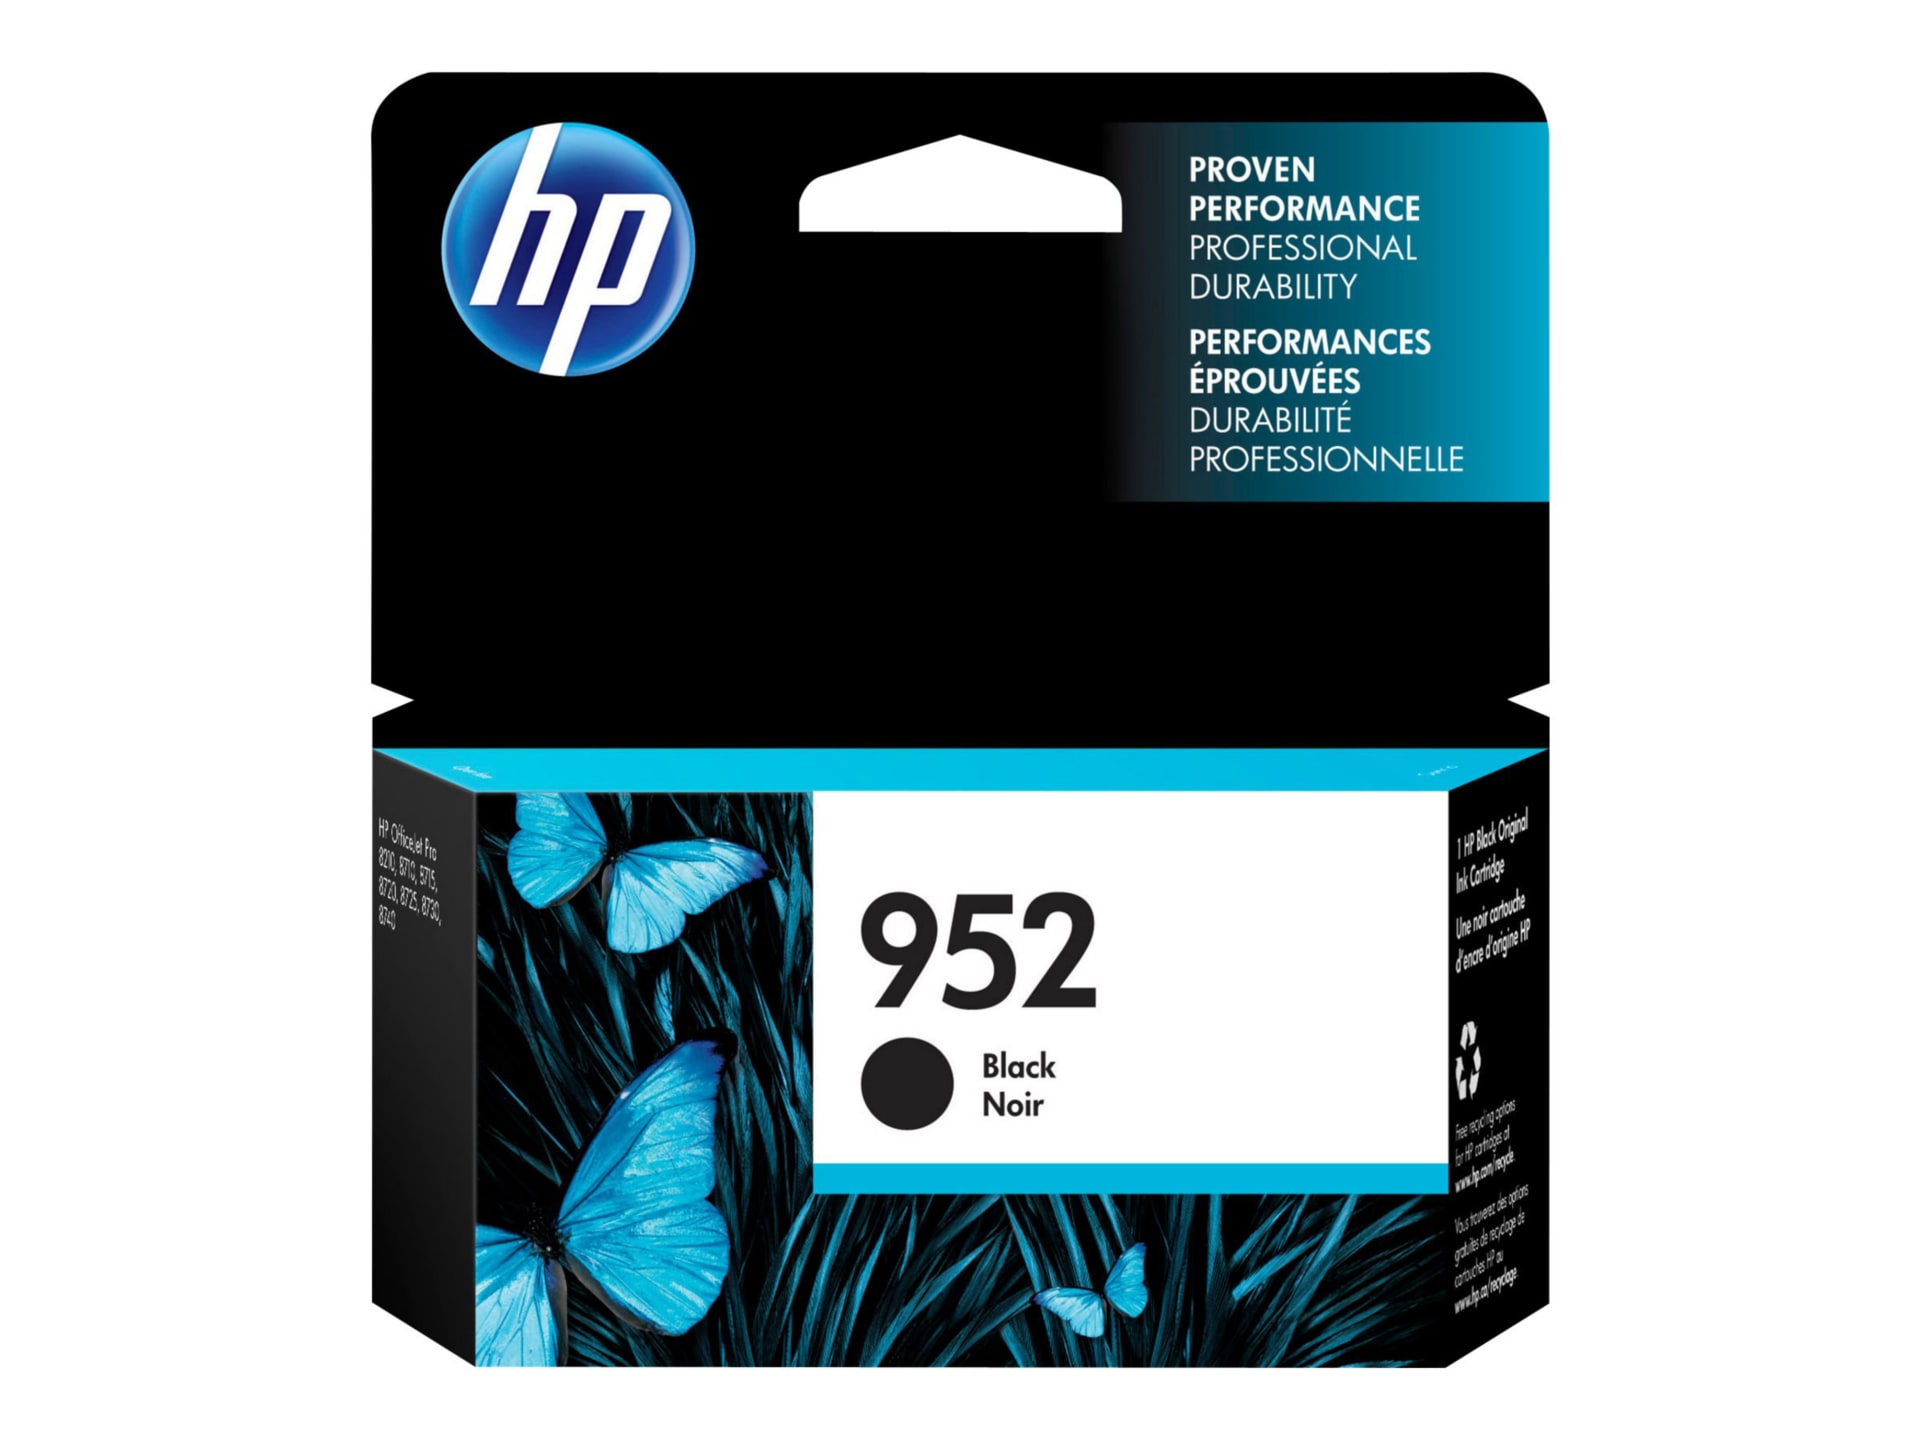 HP Officejet Pro 8730 ink cartridges - Smart Ink Cartridges Official Shop   UK HP Officejet Pro 8730 ink cartridges - buy ink refills for HP Officejet  Pro 8730 in the United Kingdom